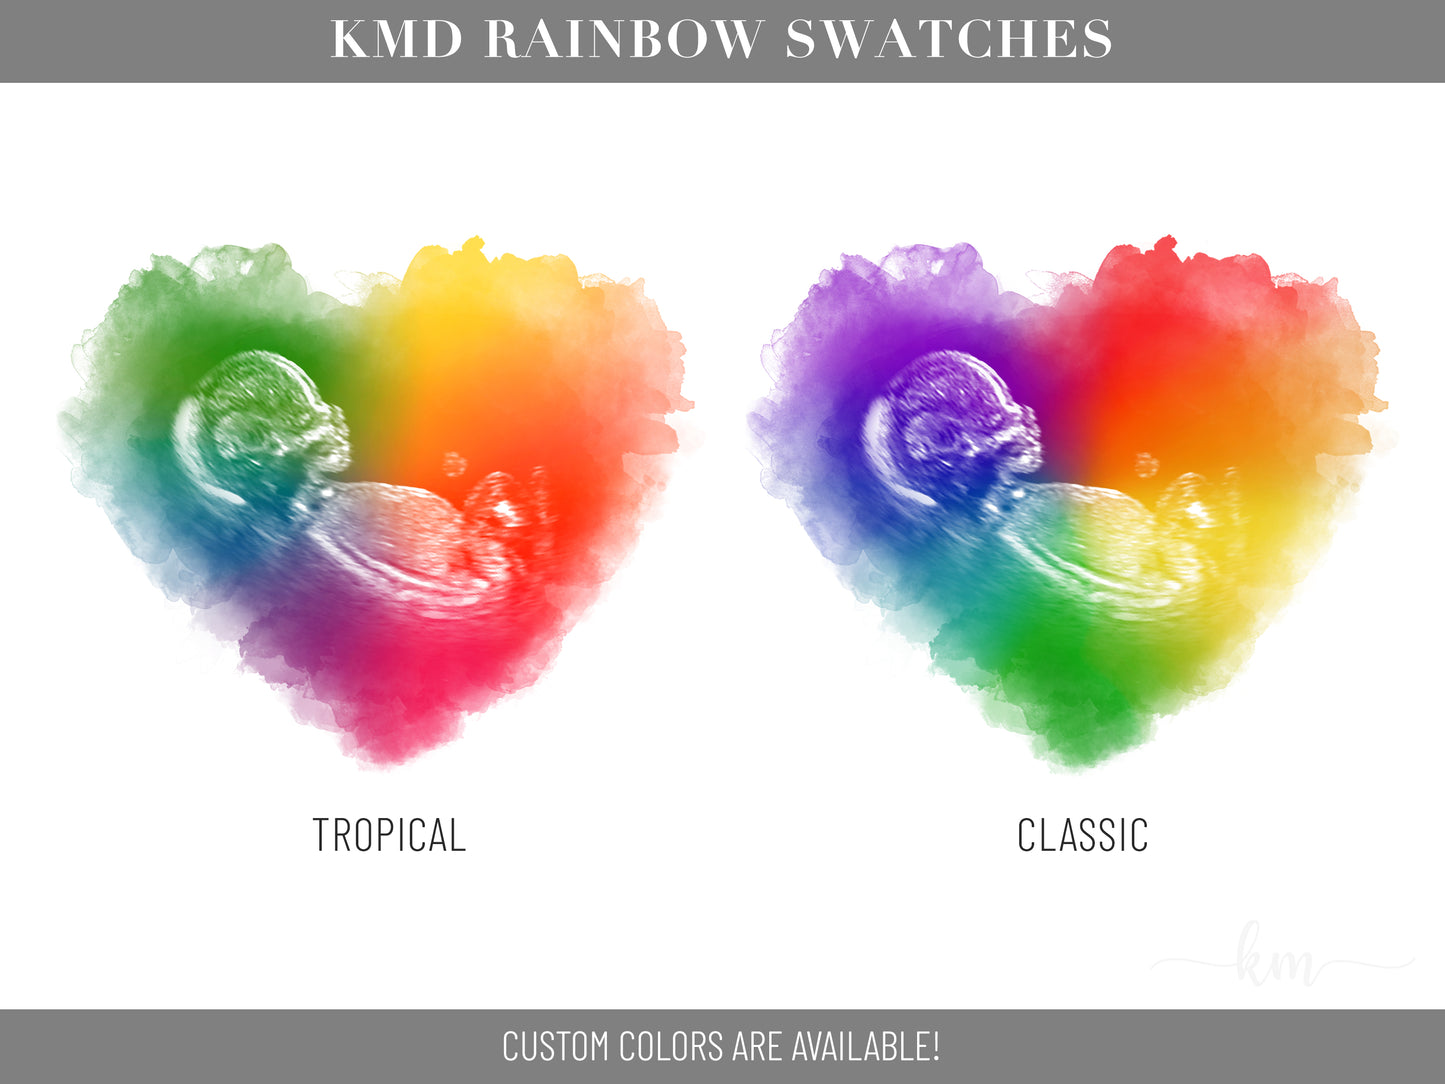 Rainbow Baby Heart Watercolor Ultrasound Art